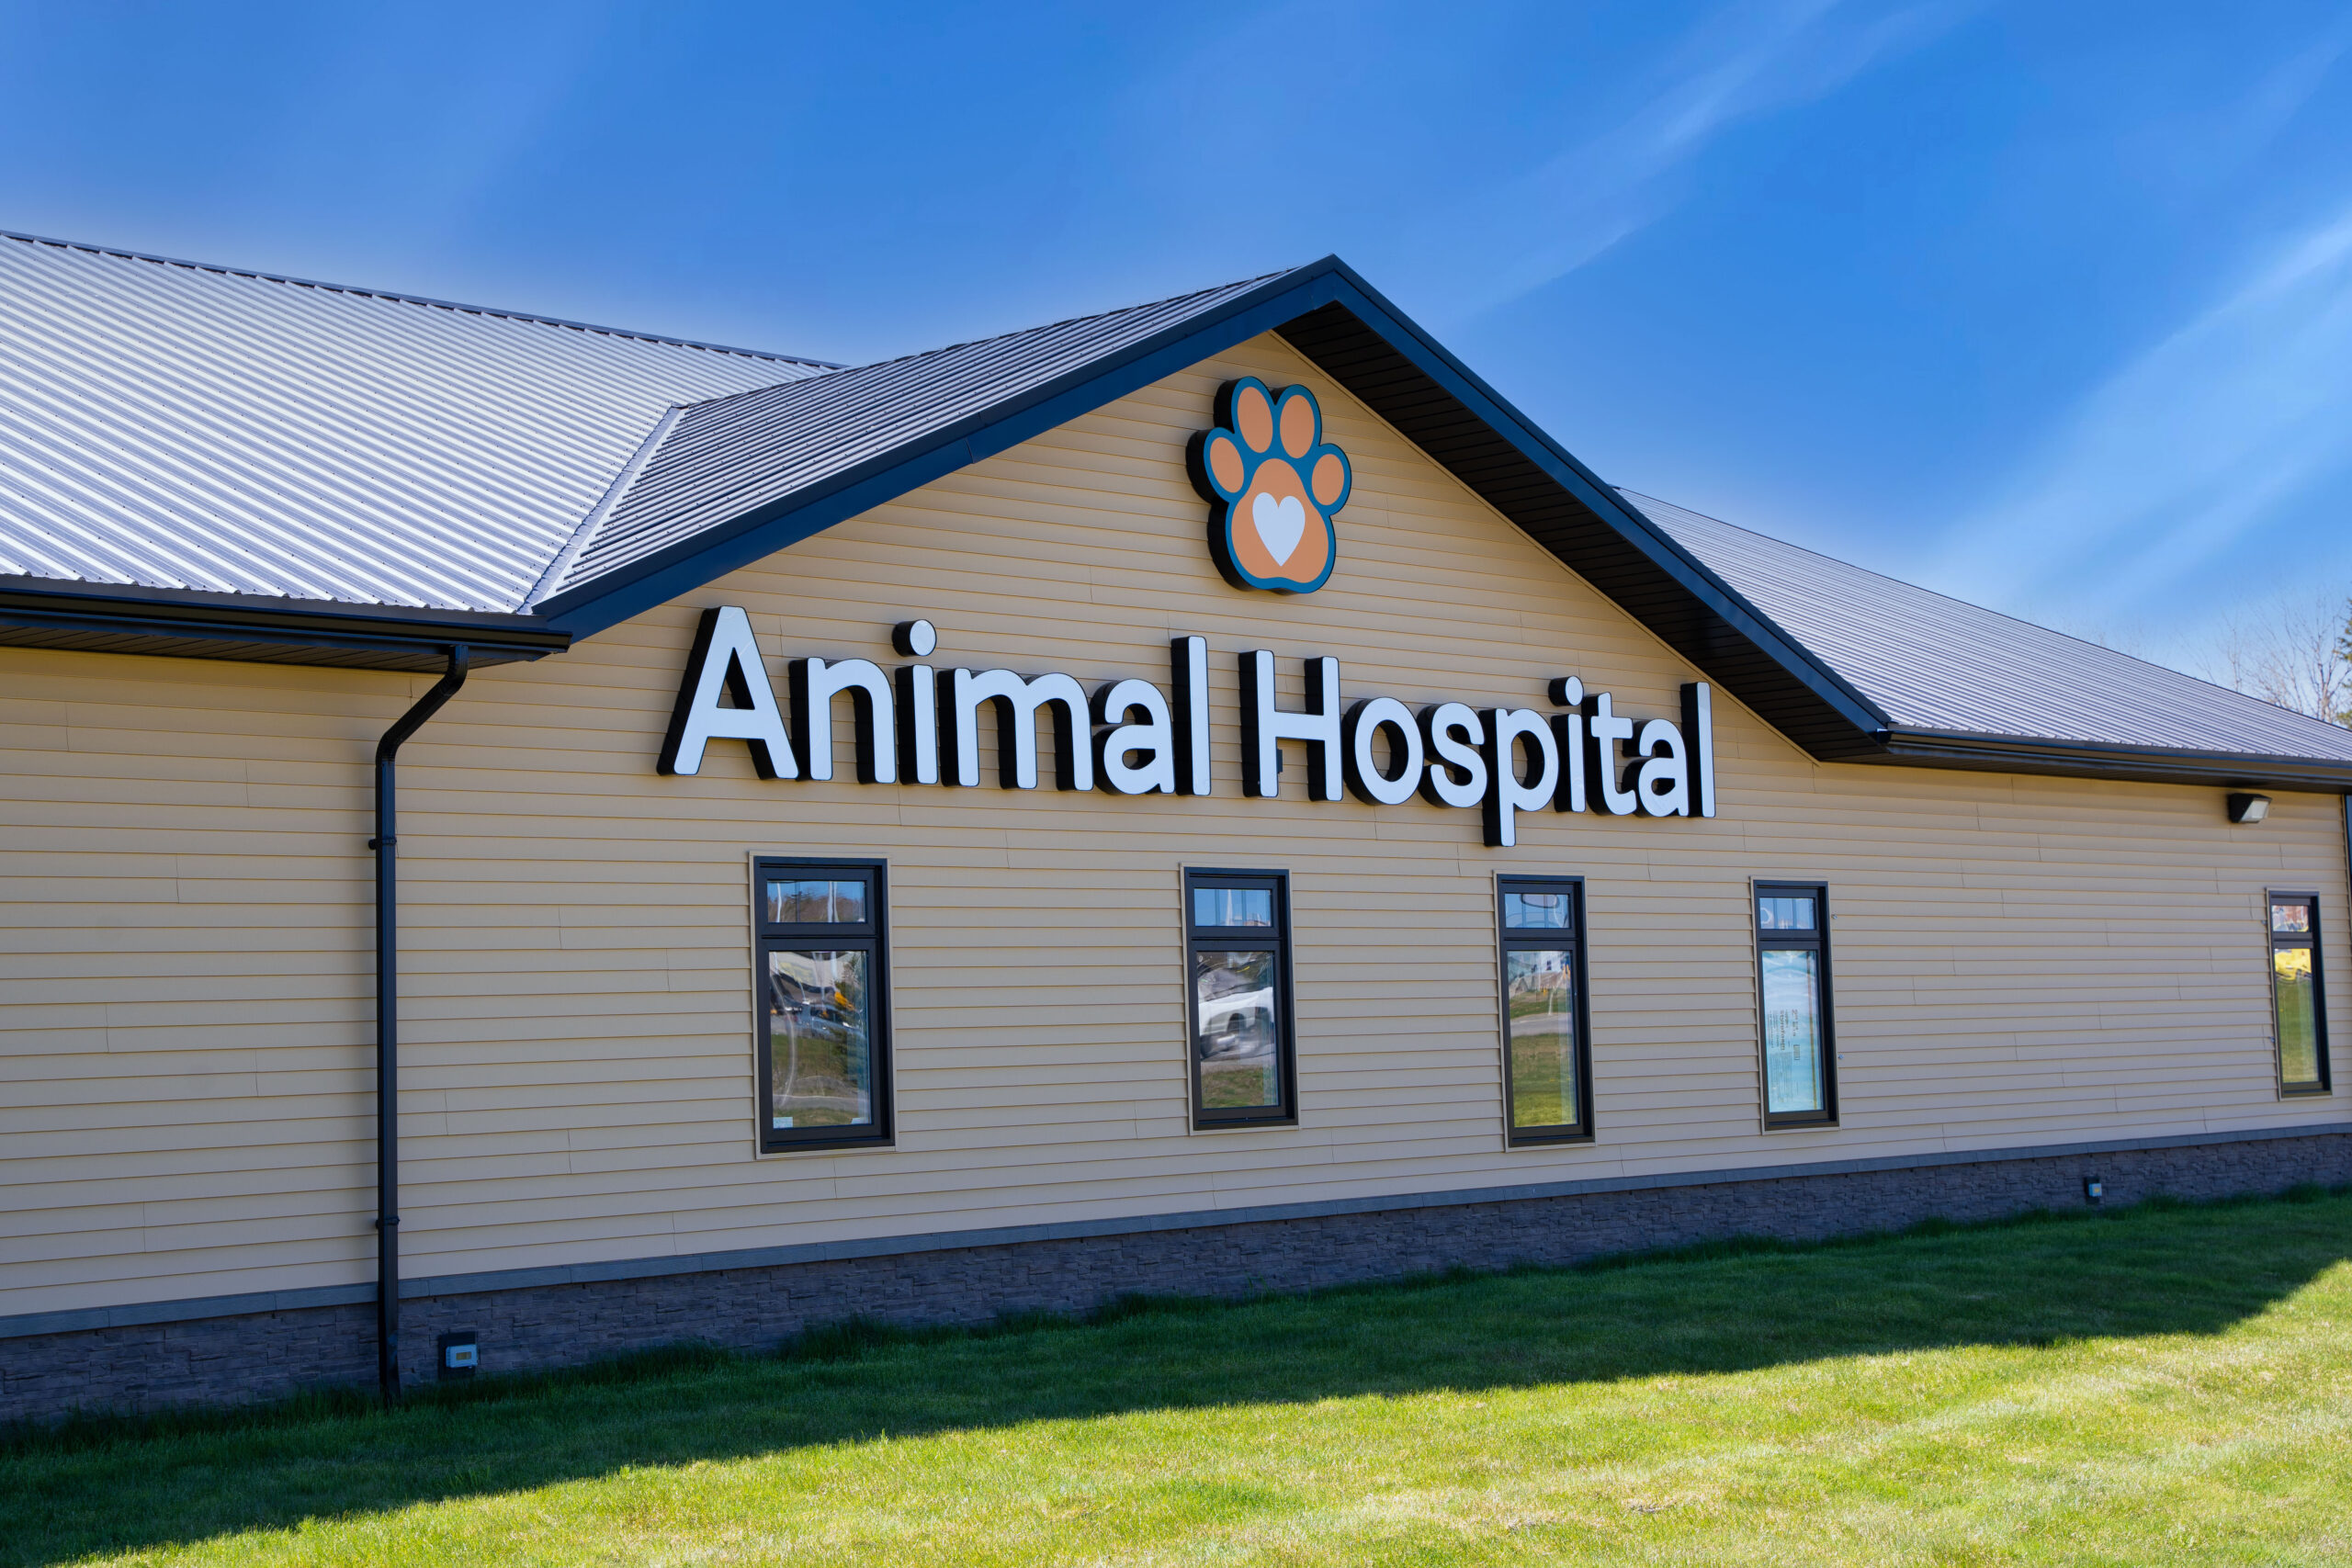 Cumberland Animal Hospital Building Sign Photo